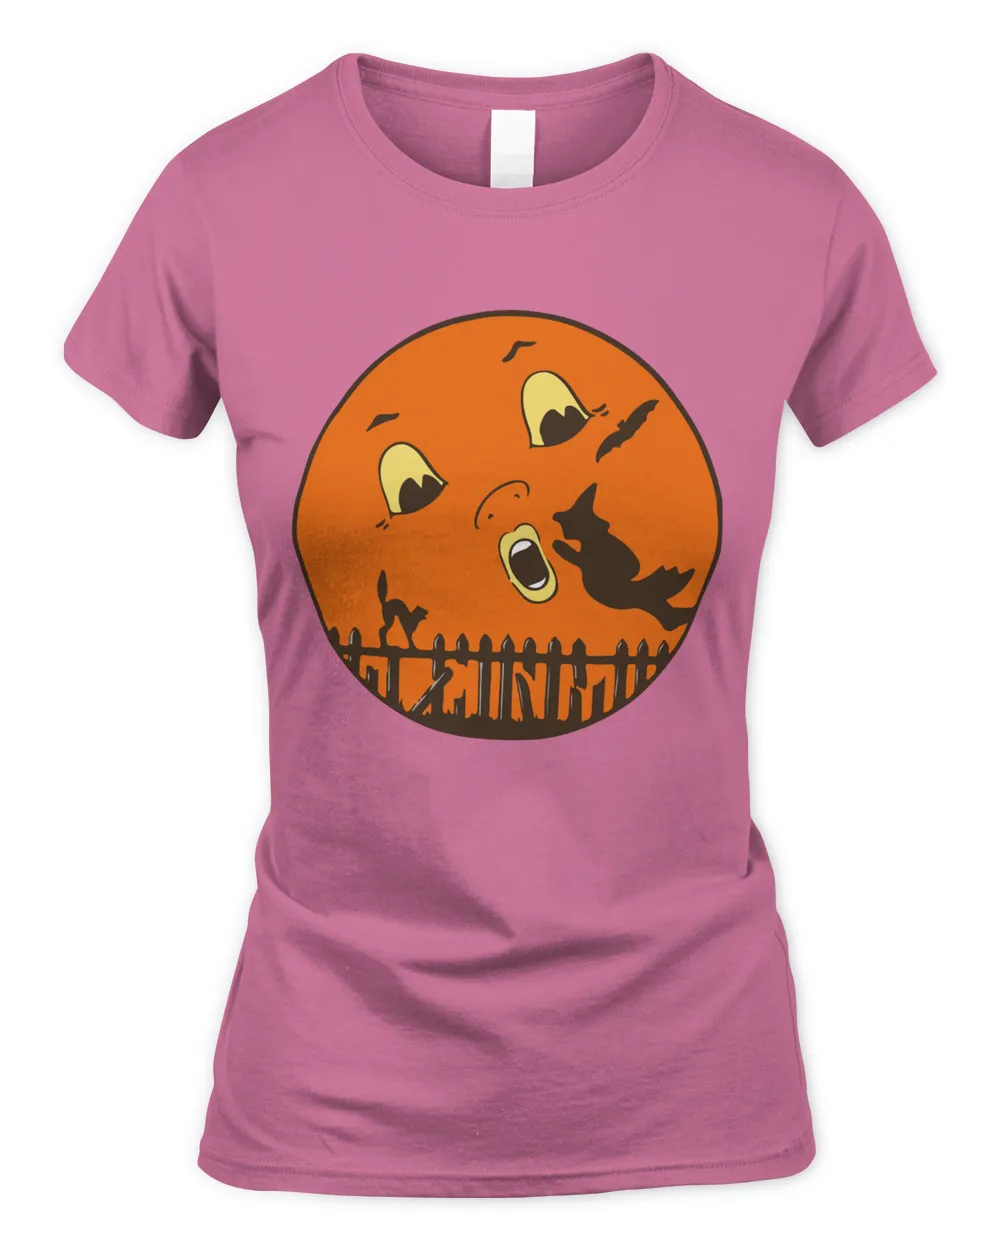 [Hallowen]Beistle Vintage Halloween T-shirt classique